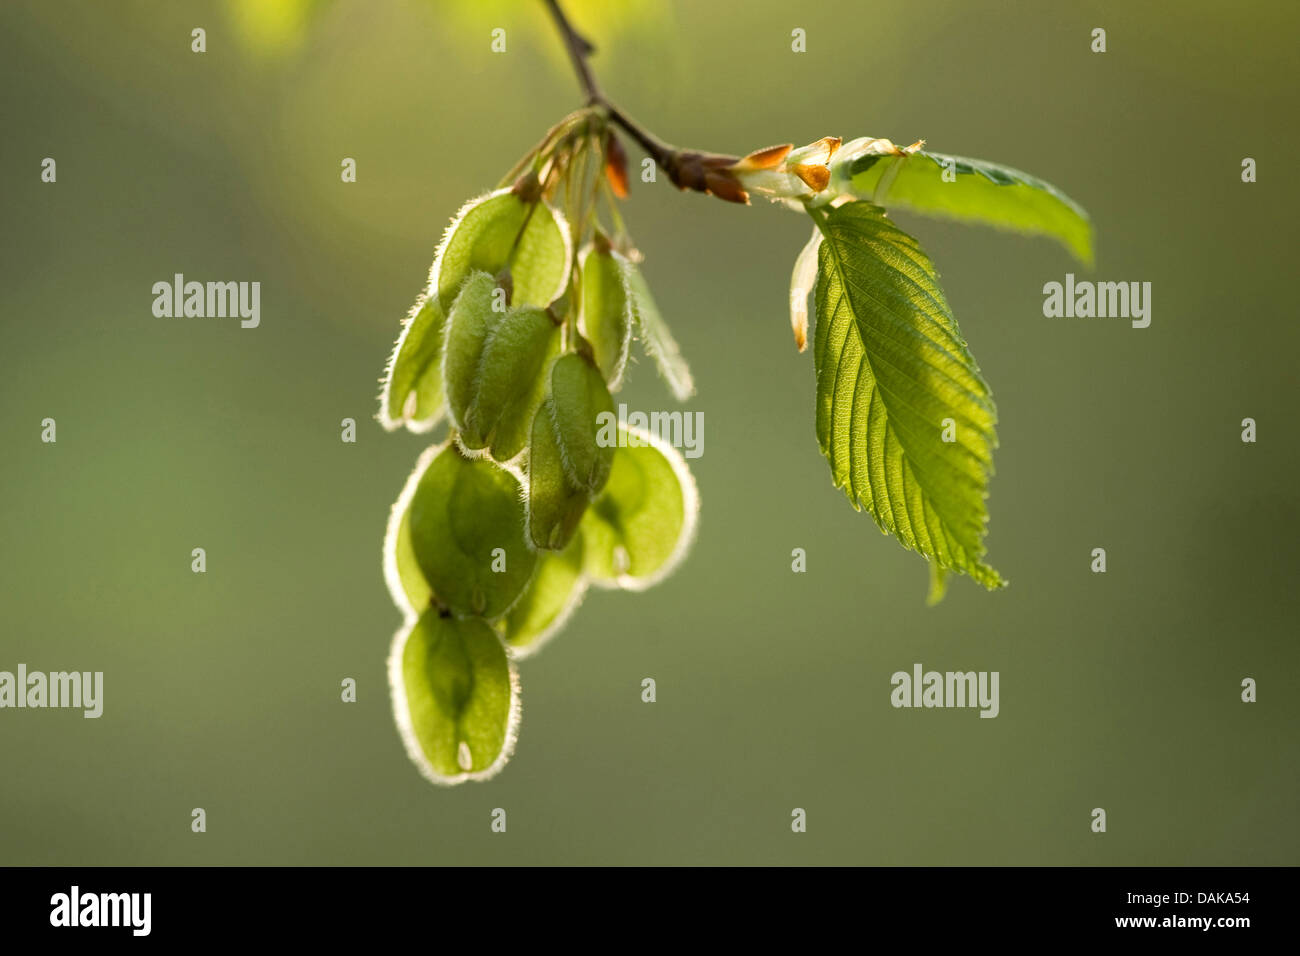 European elm, European white elm (Ulmus laevis), branch with fruits in sunlight, Germany Stock Photo